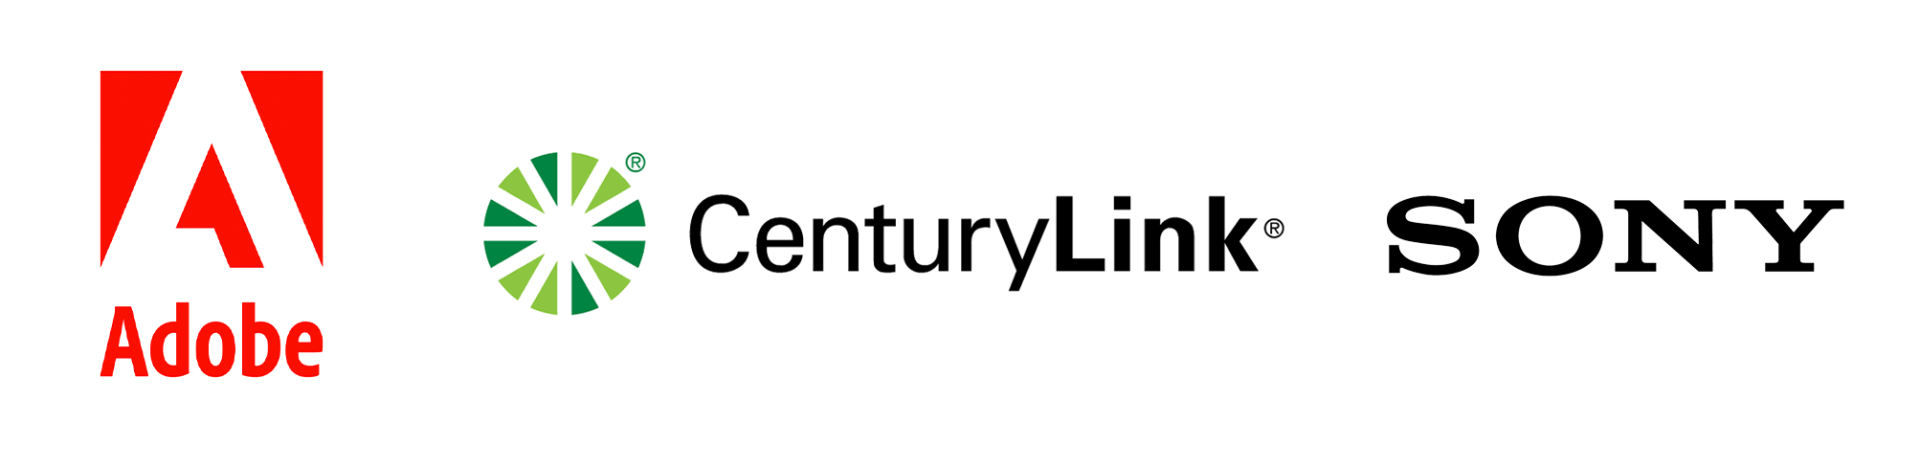 Logo Bar with Adobe logo, CenturyLink logo, and Sony logo